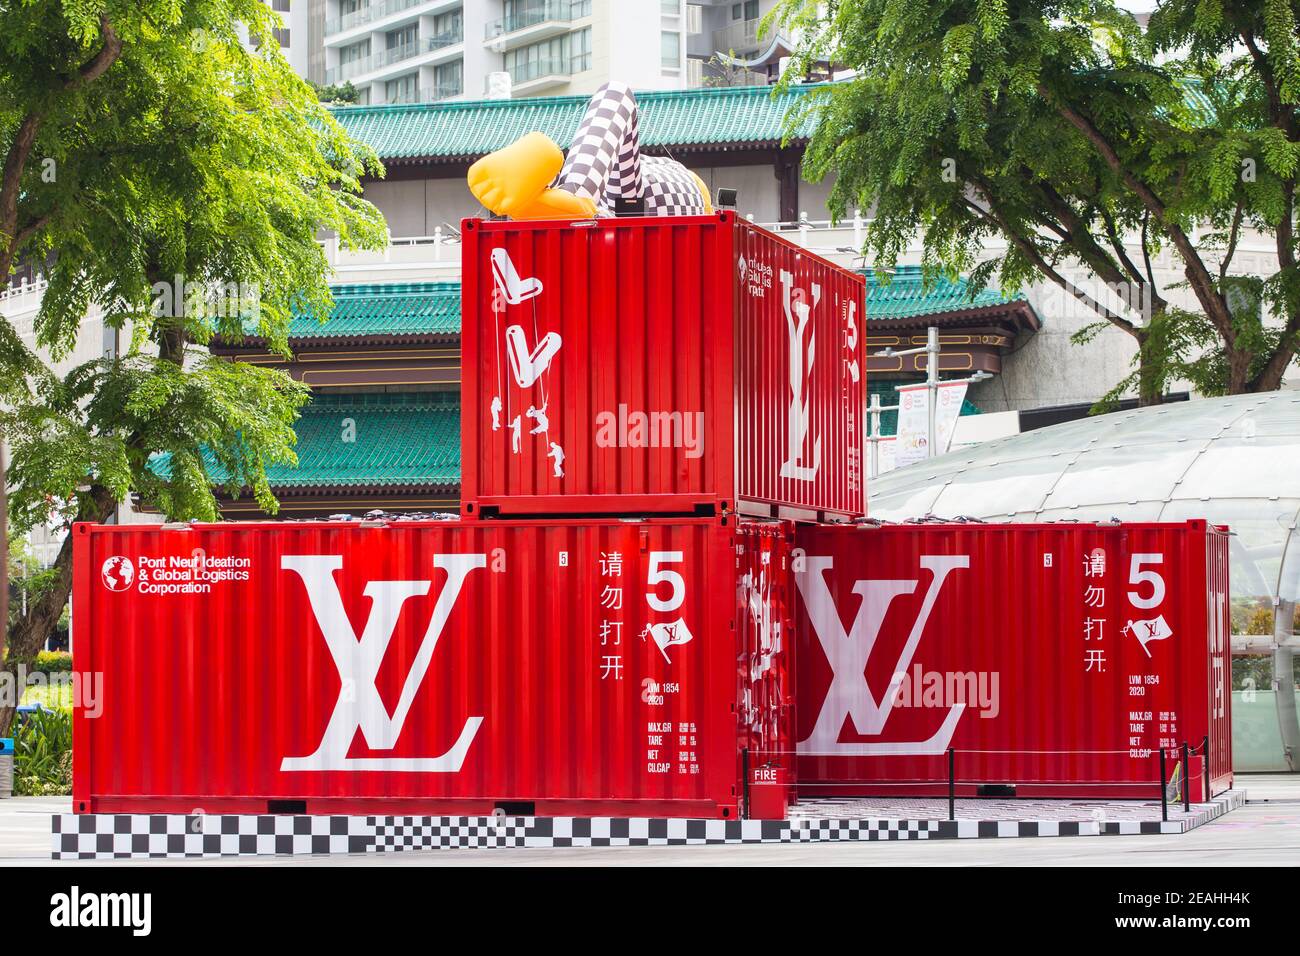 Singapore June 13 2018 Louis Vuitton Stock Photo 1206569935